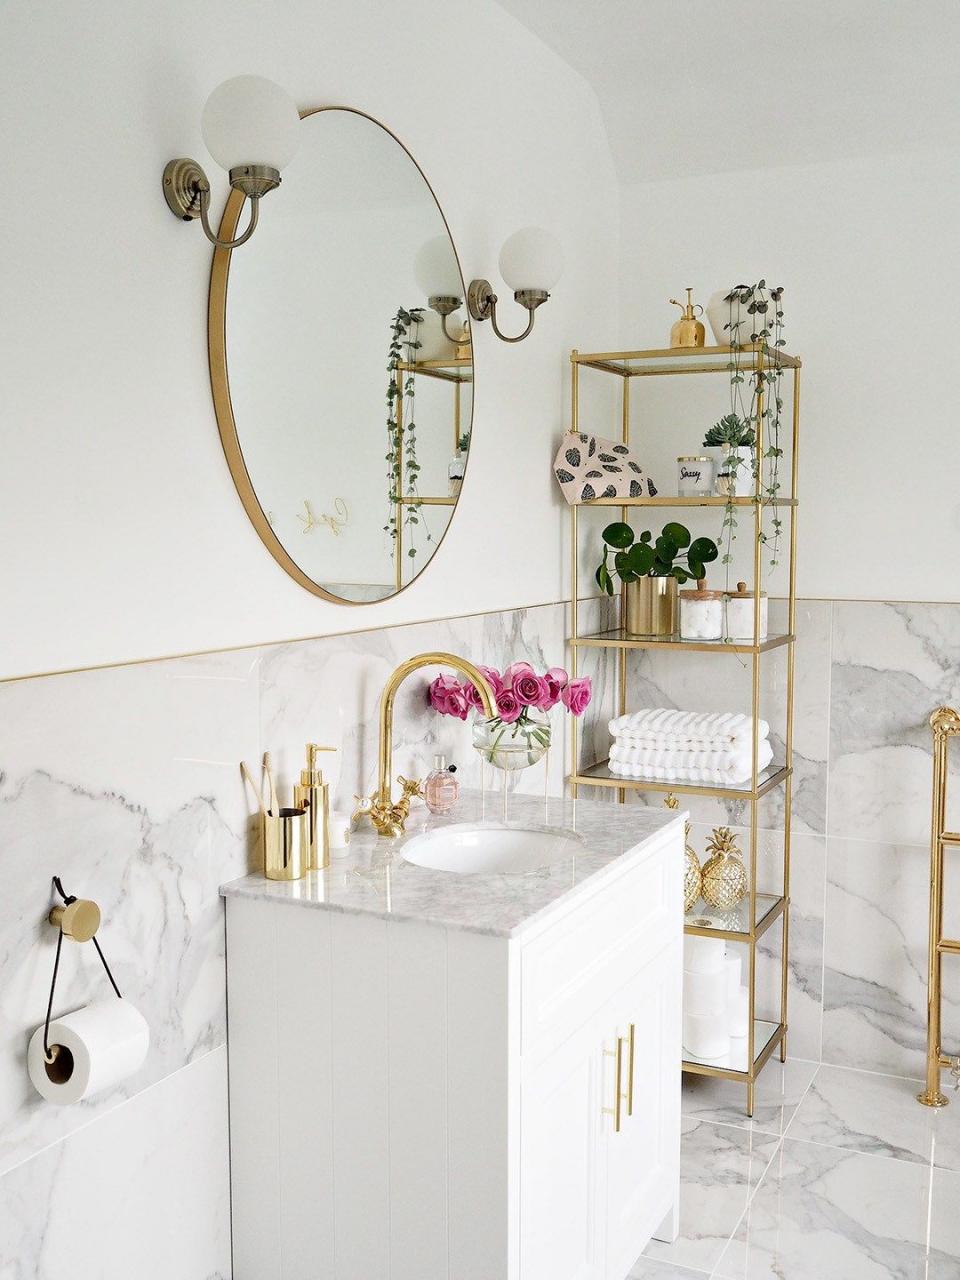 Marble & Gold Bathroom Gold bathroom decor, Bathroom design decor